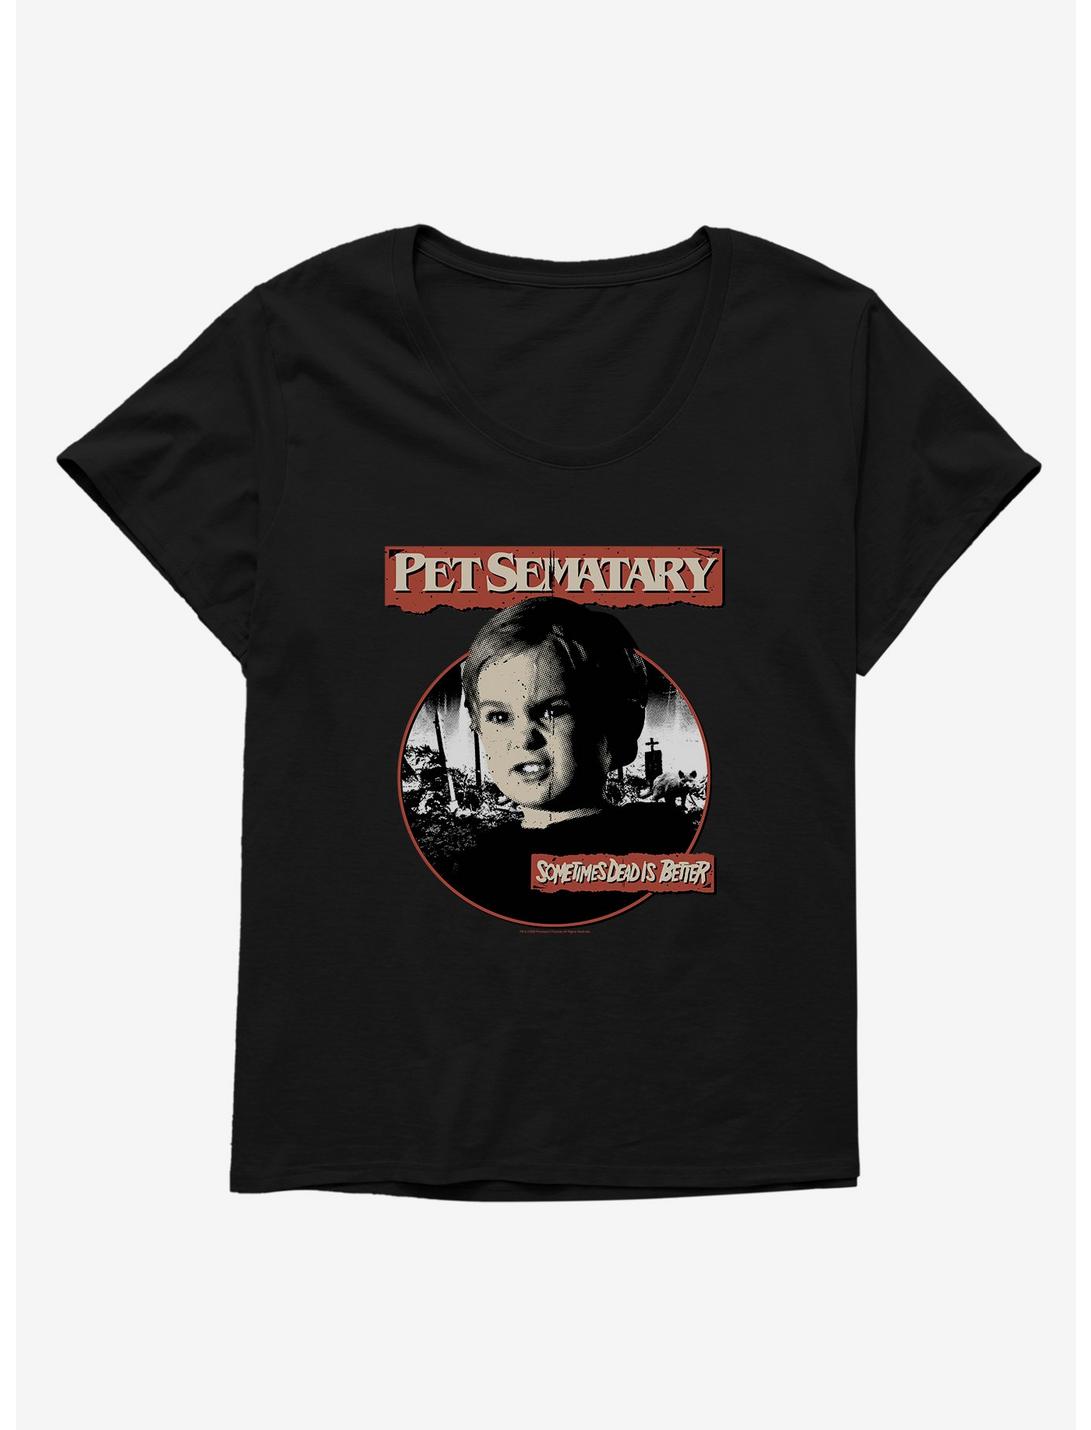 Pet Sematary Gage Creed Womens T-Shirt Plus Size, BLACK, hi-res